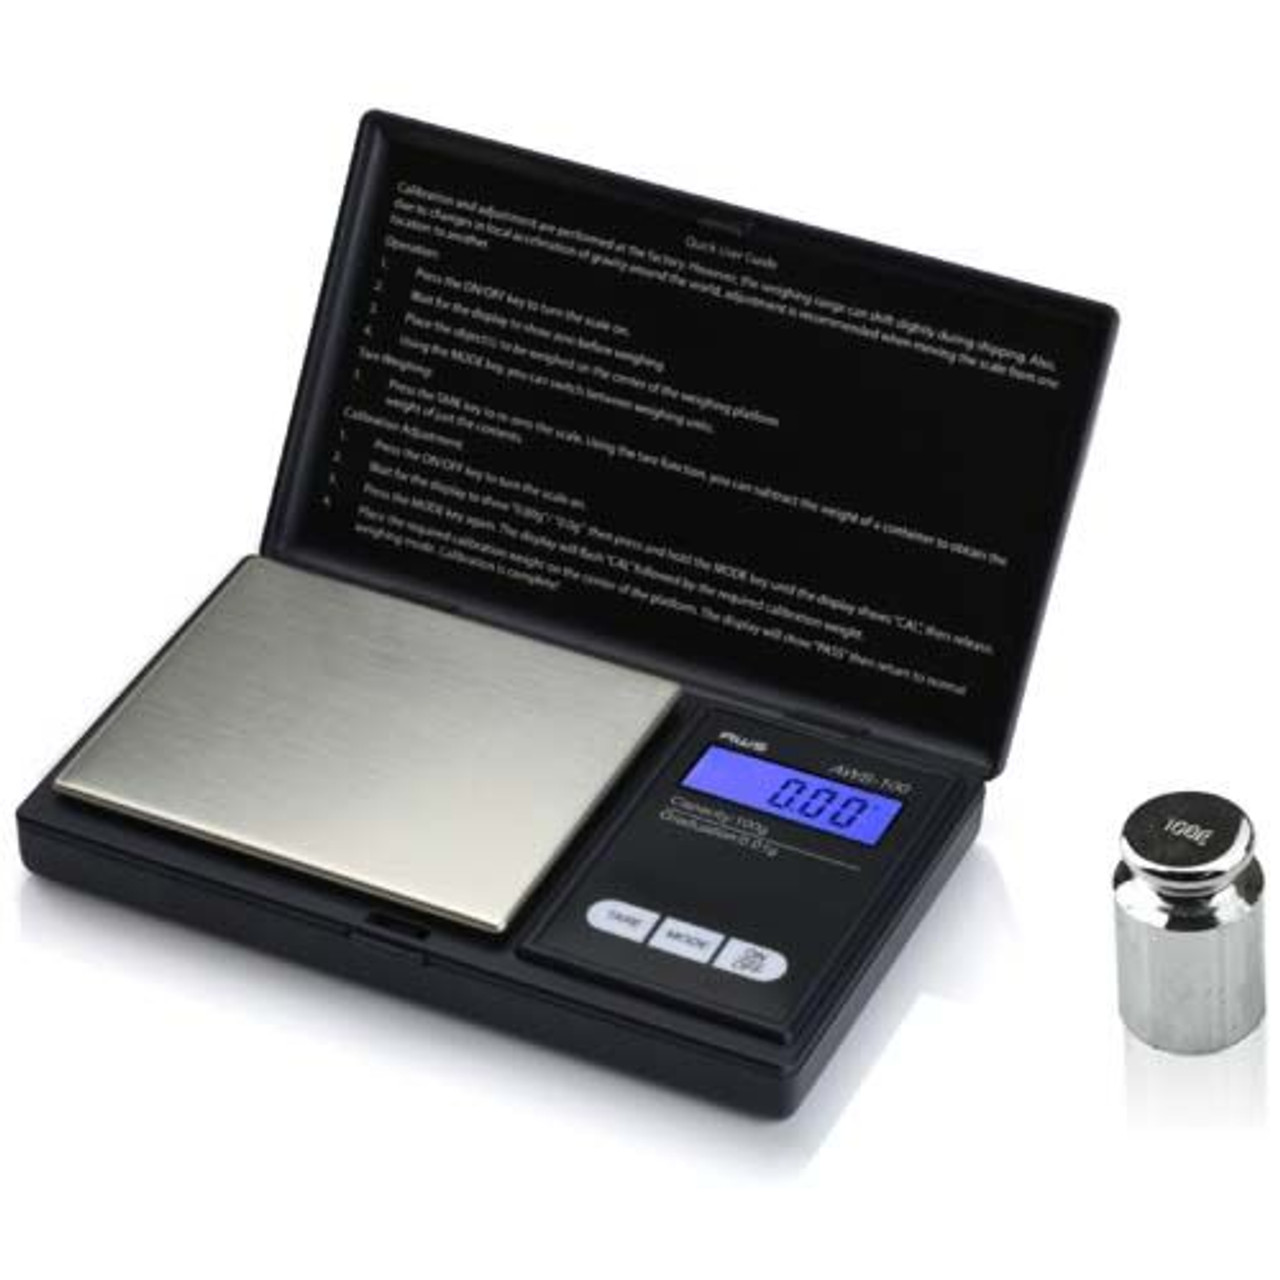 Weigh Gram Digital Pocket Scales 100g by 0.01g